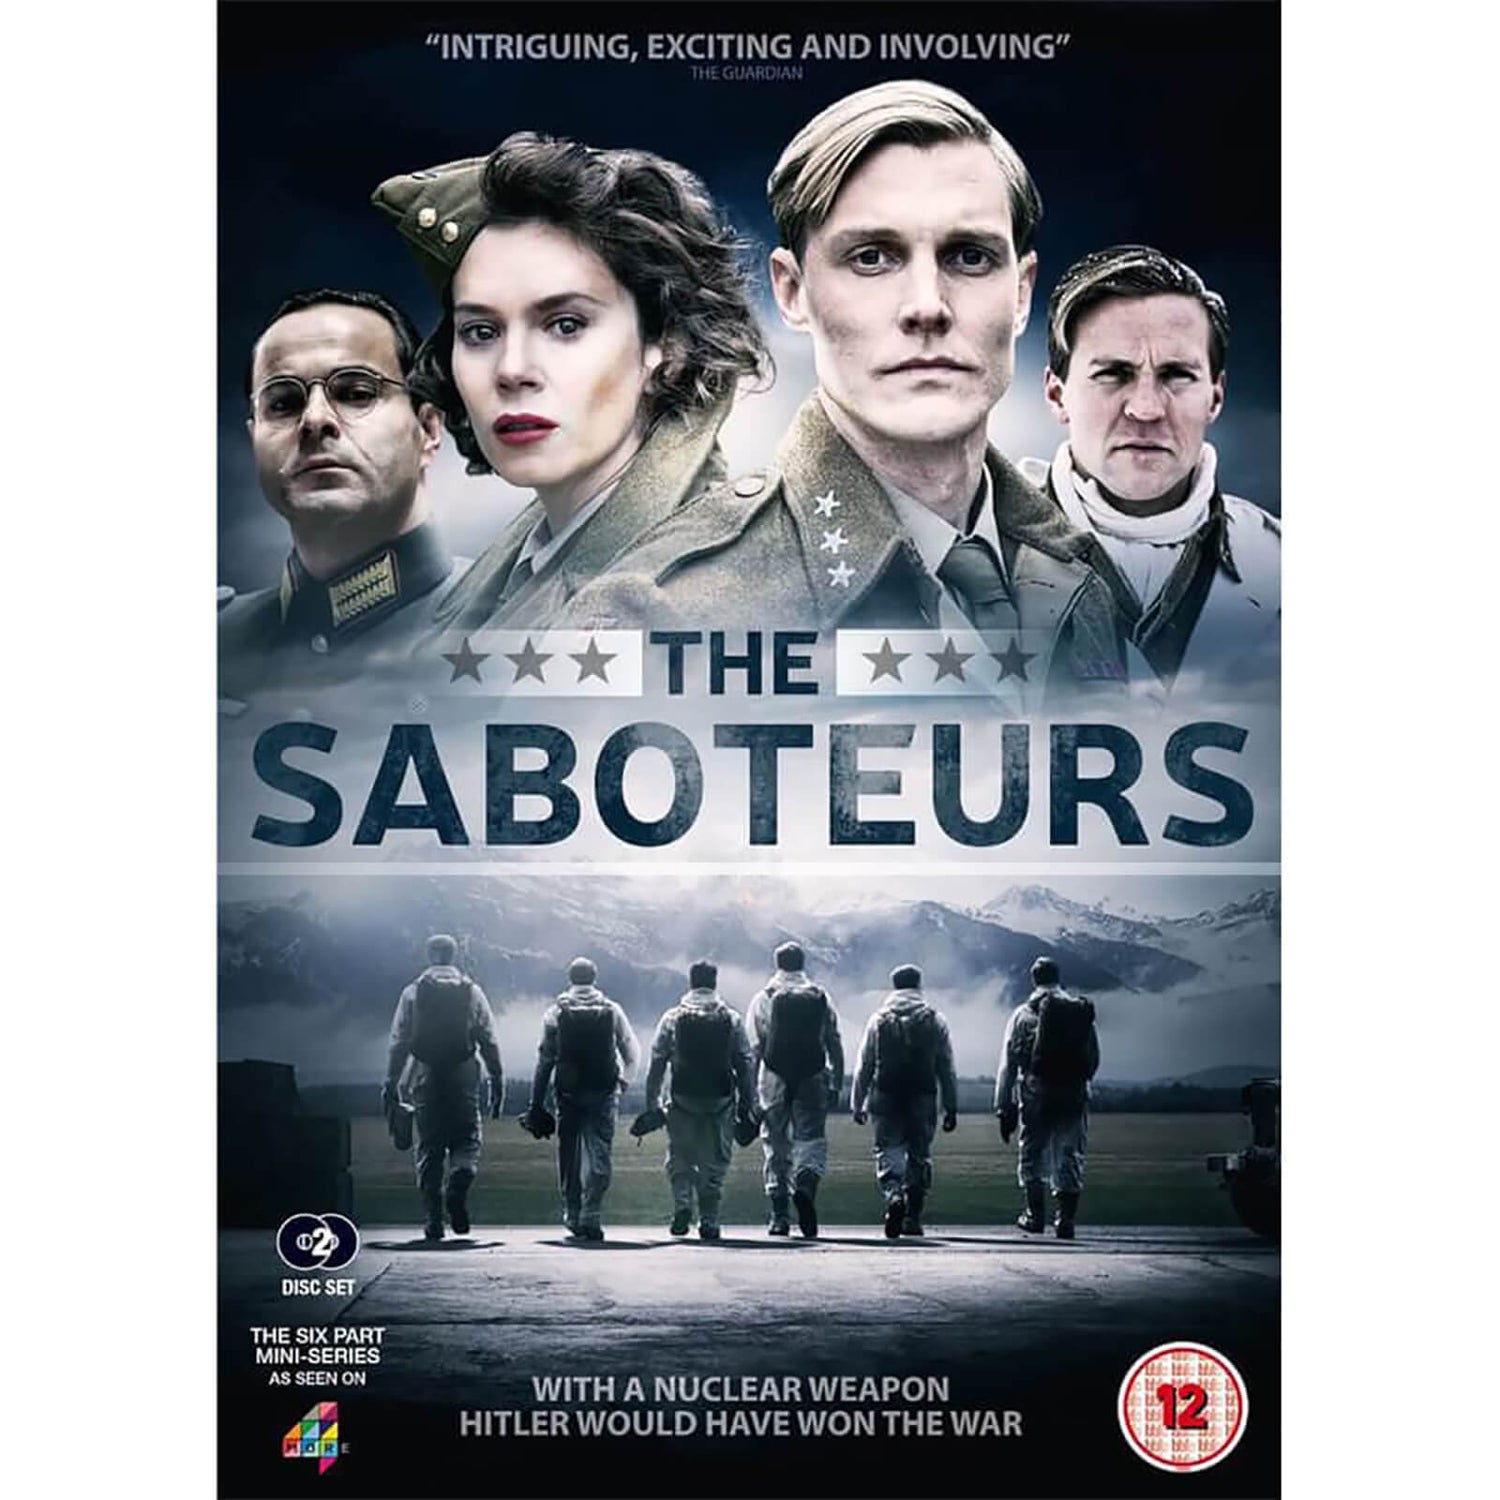 The Saboteurs DVD